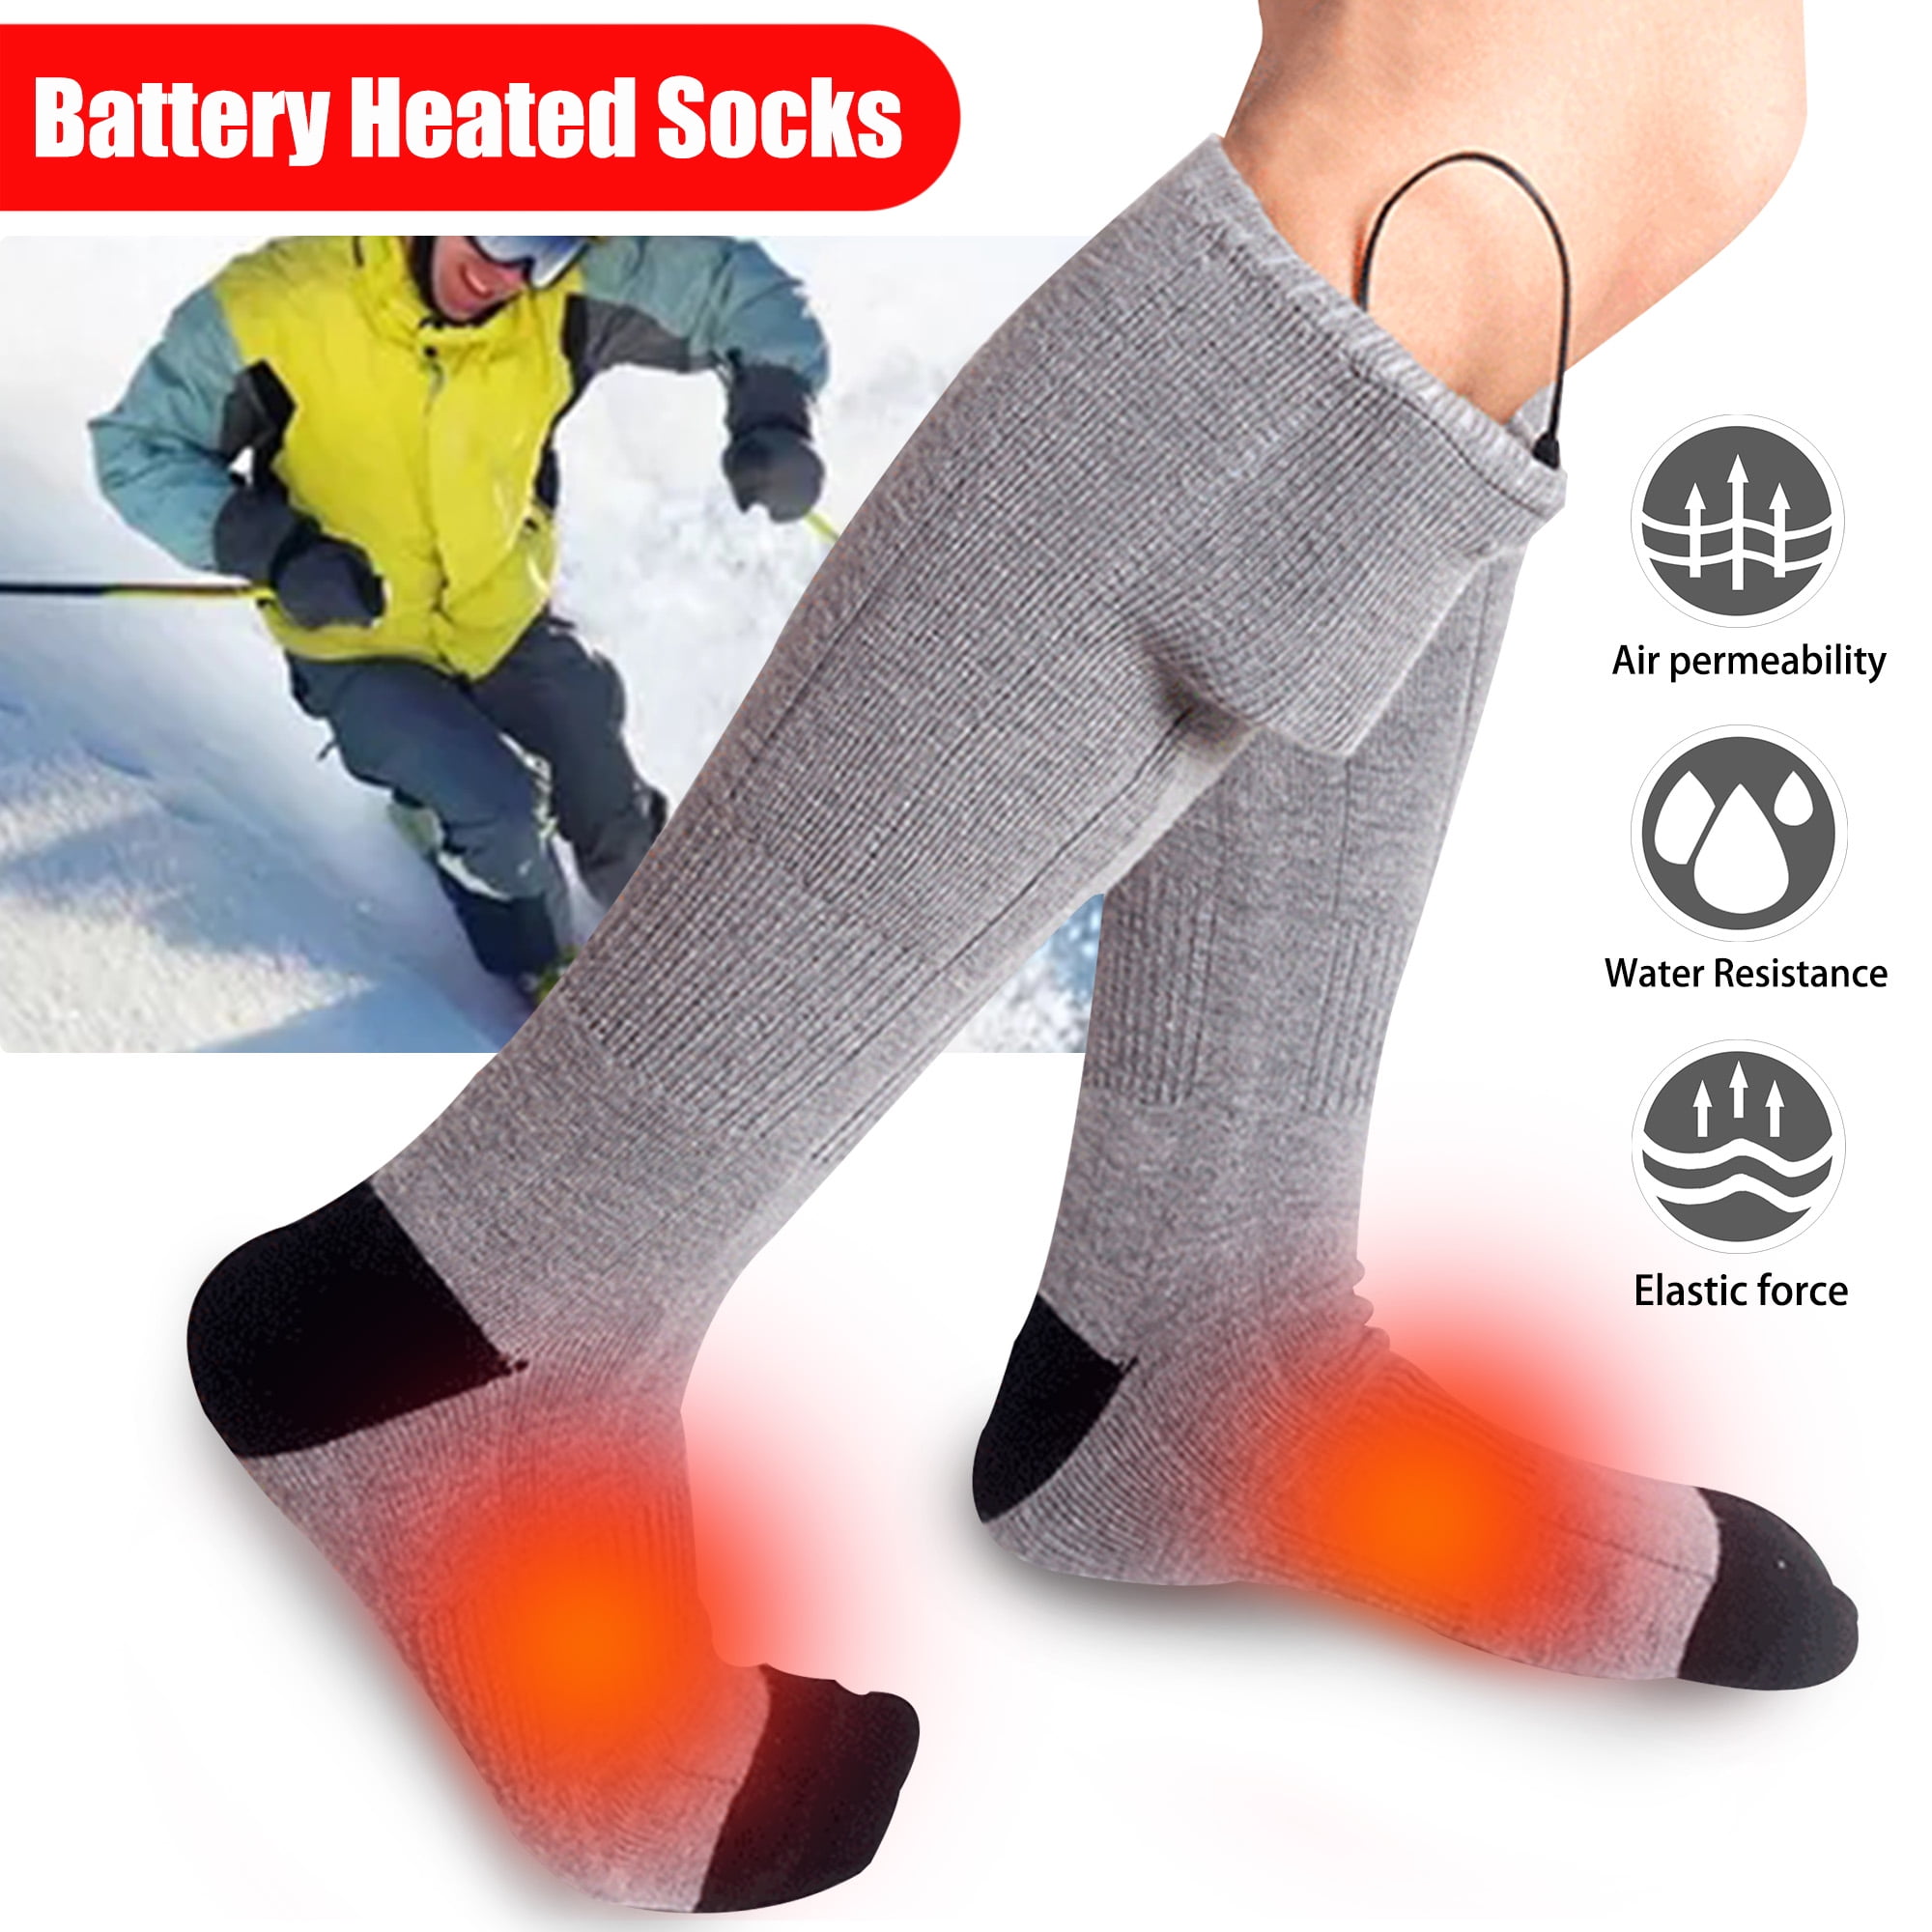 Elastic Heating knitting Socks Battery Electric Heating Warm Sock Outdoor US 